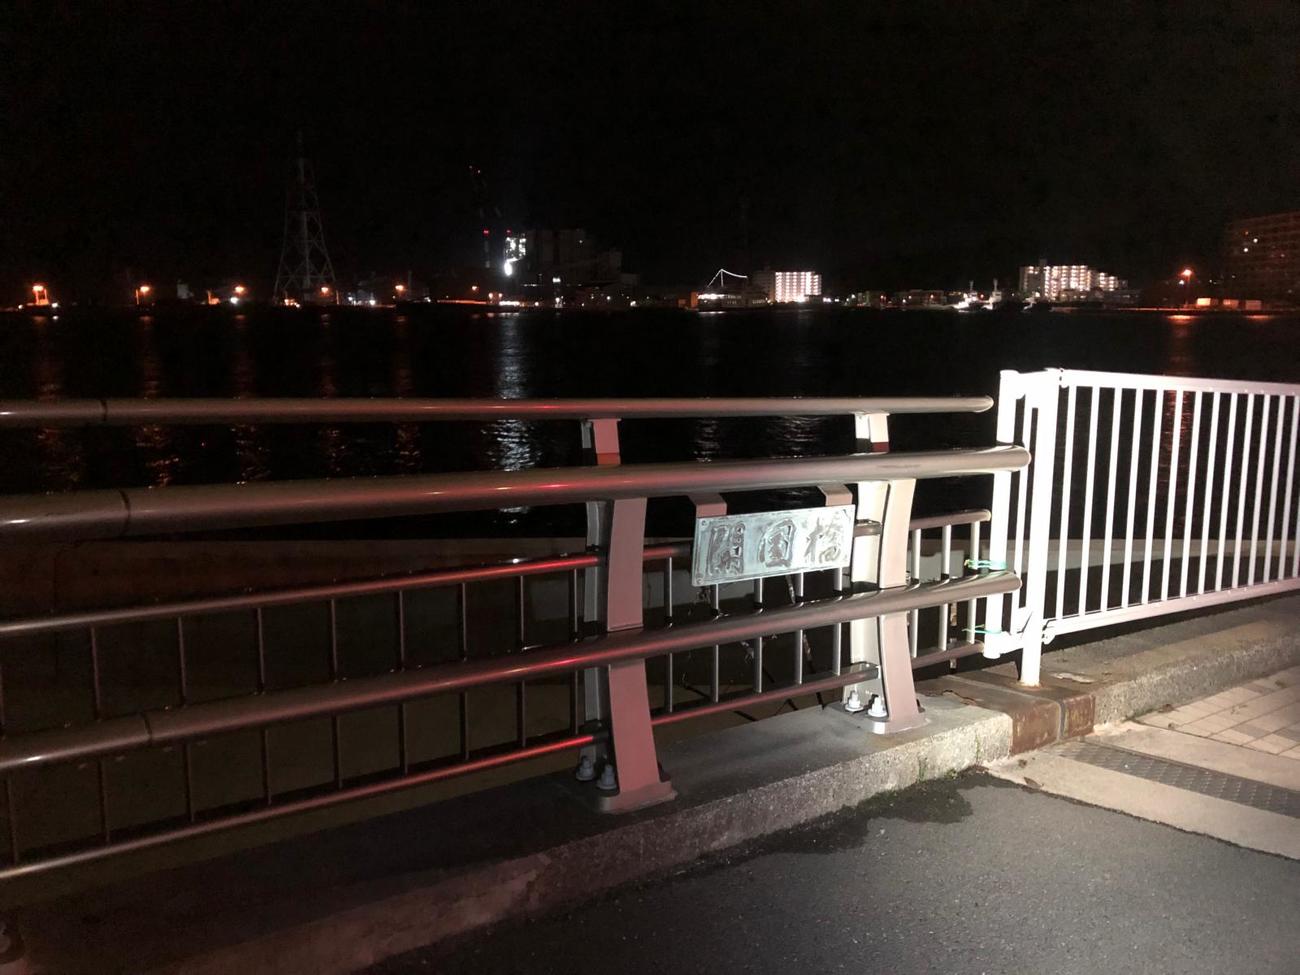 15日午前1時36分、久里浜の開国橋